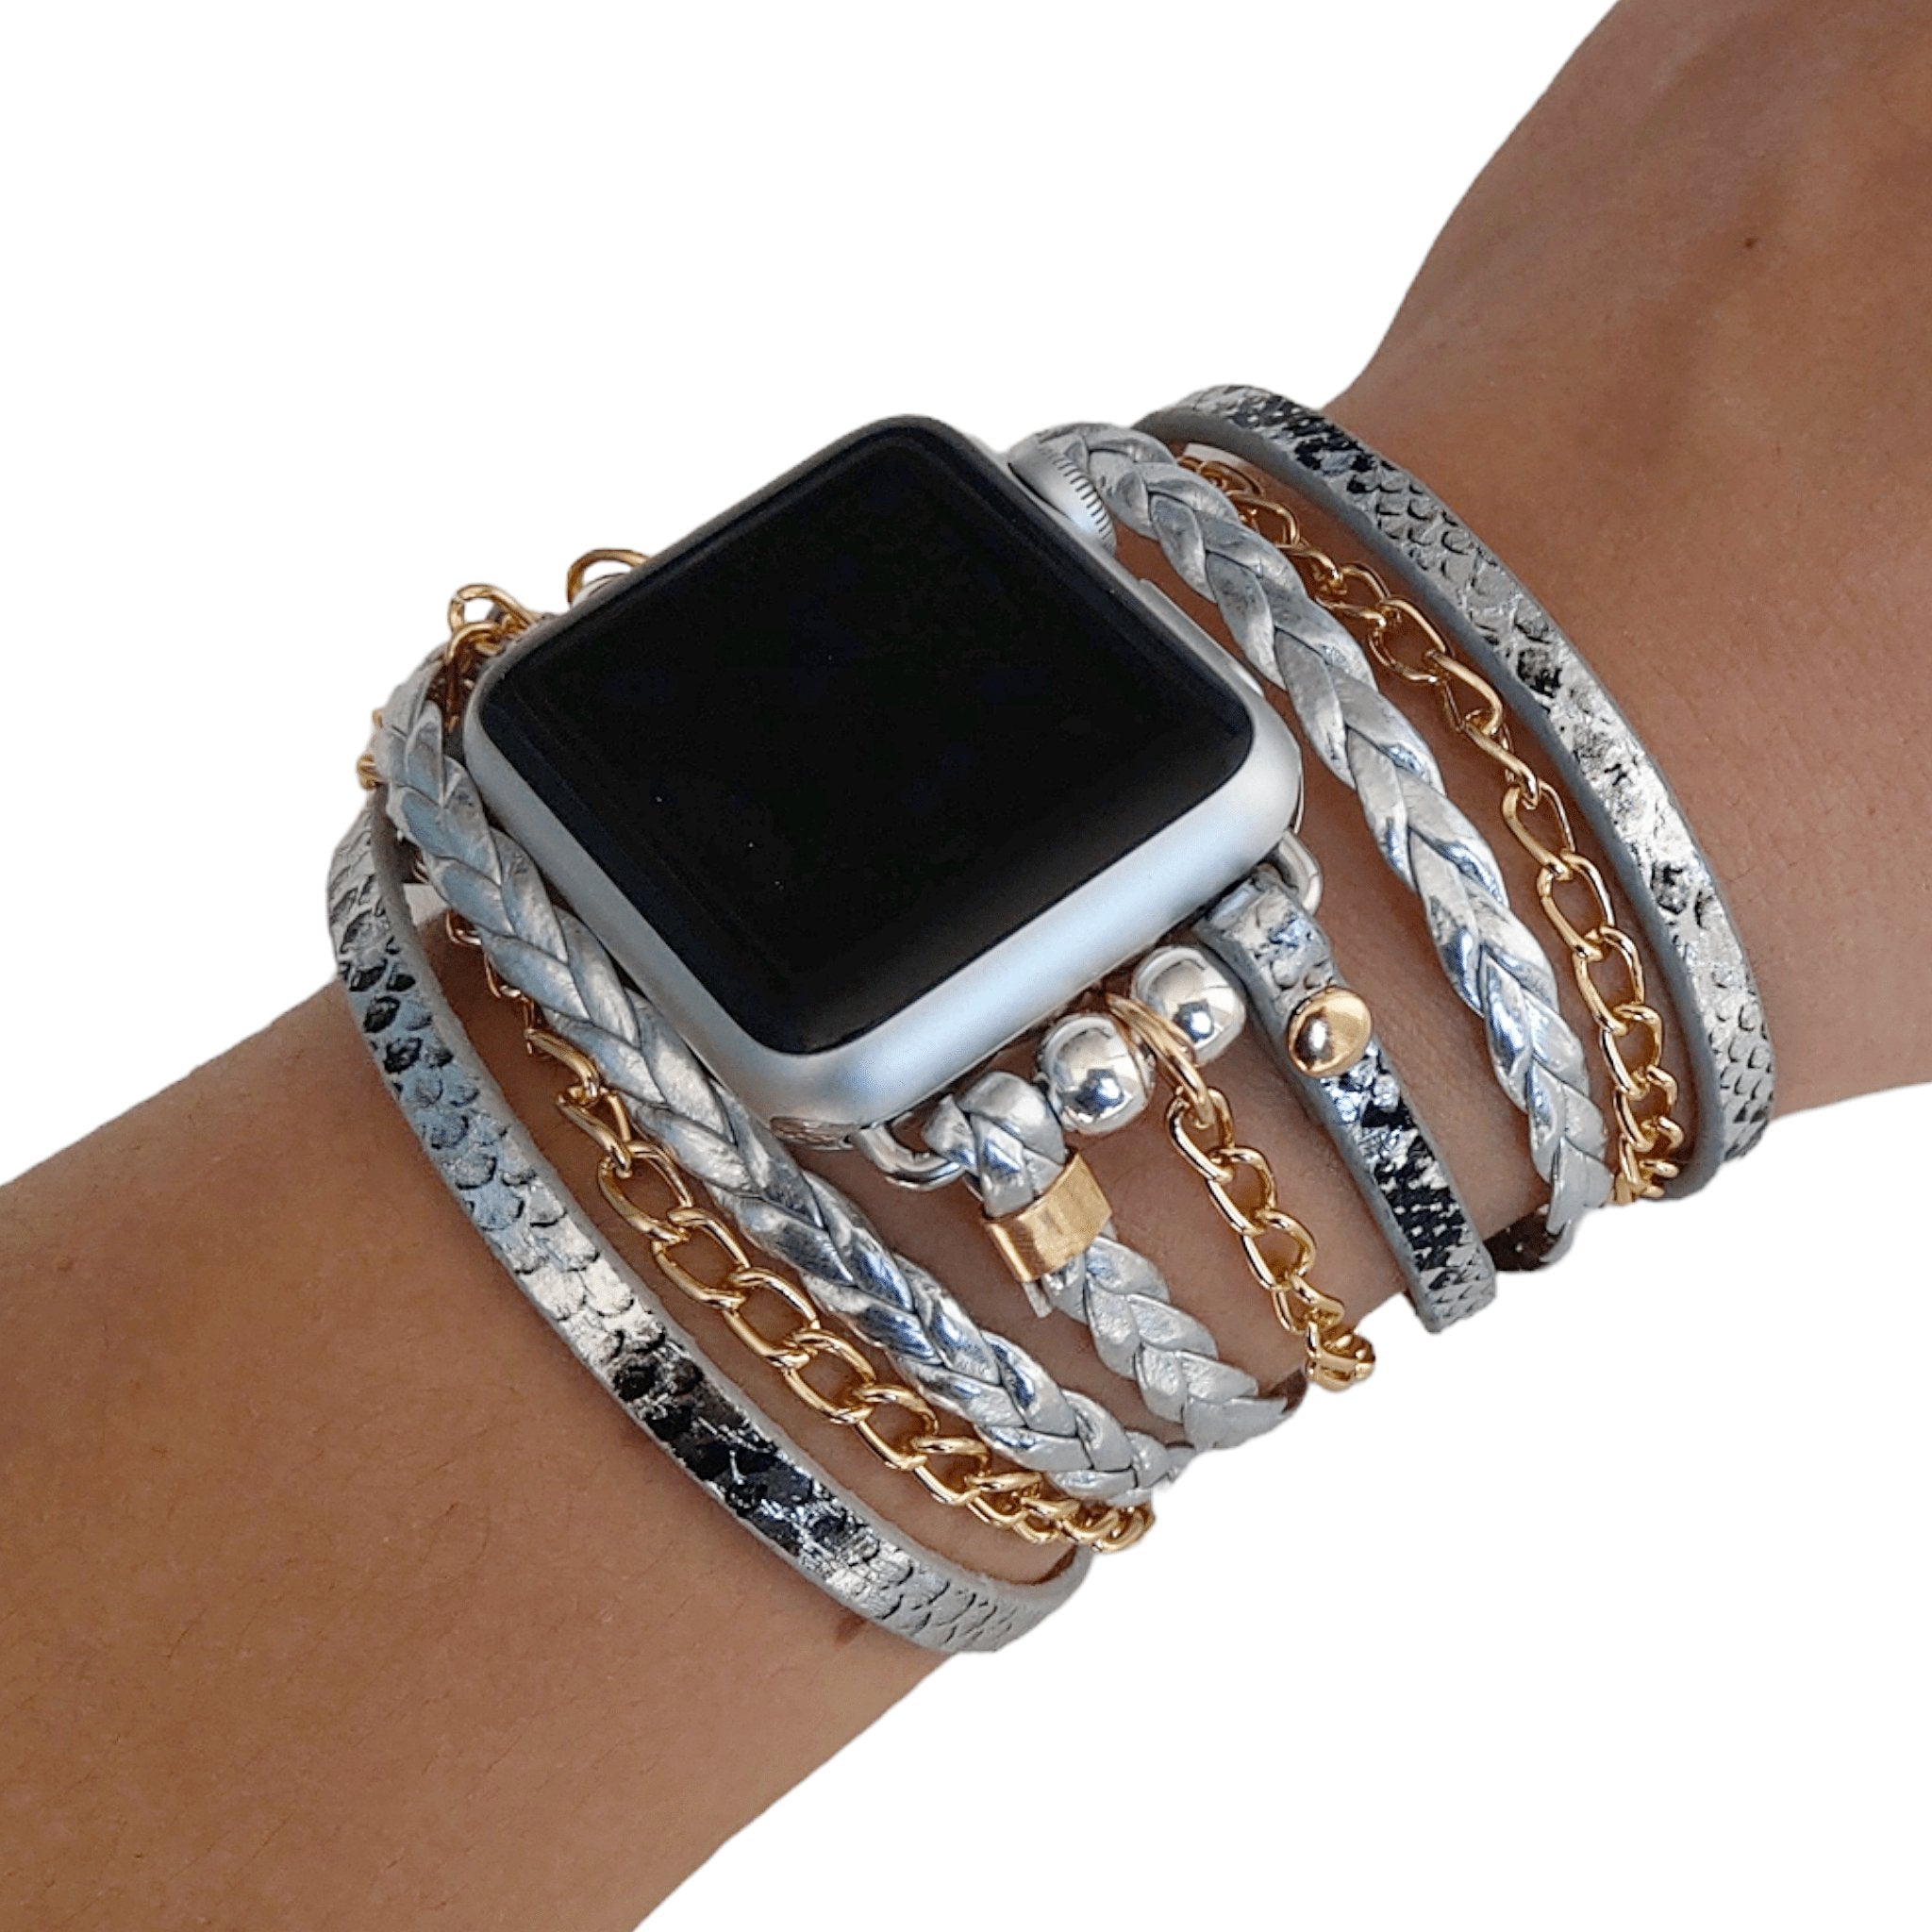 Vegan Leather Apple Watch Band - Mareevo